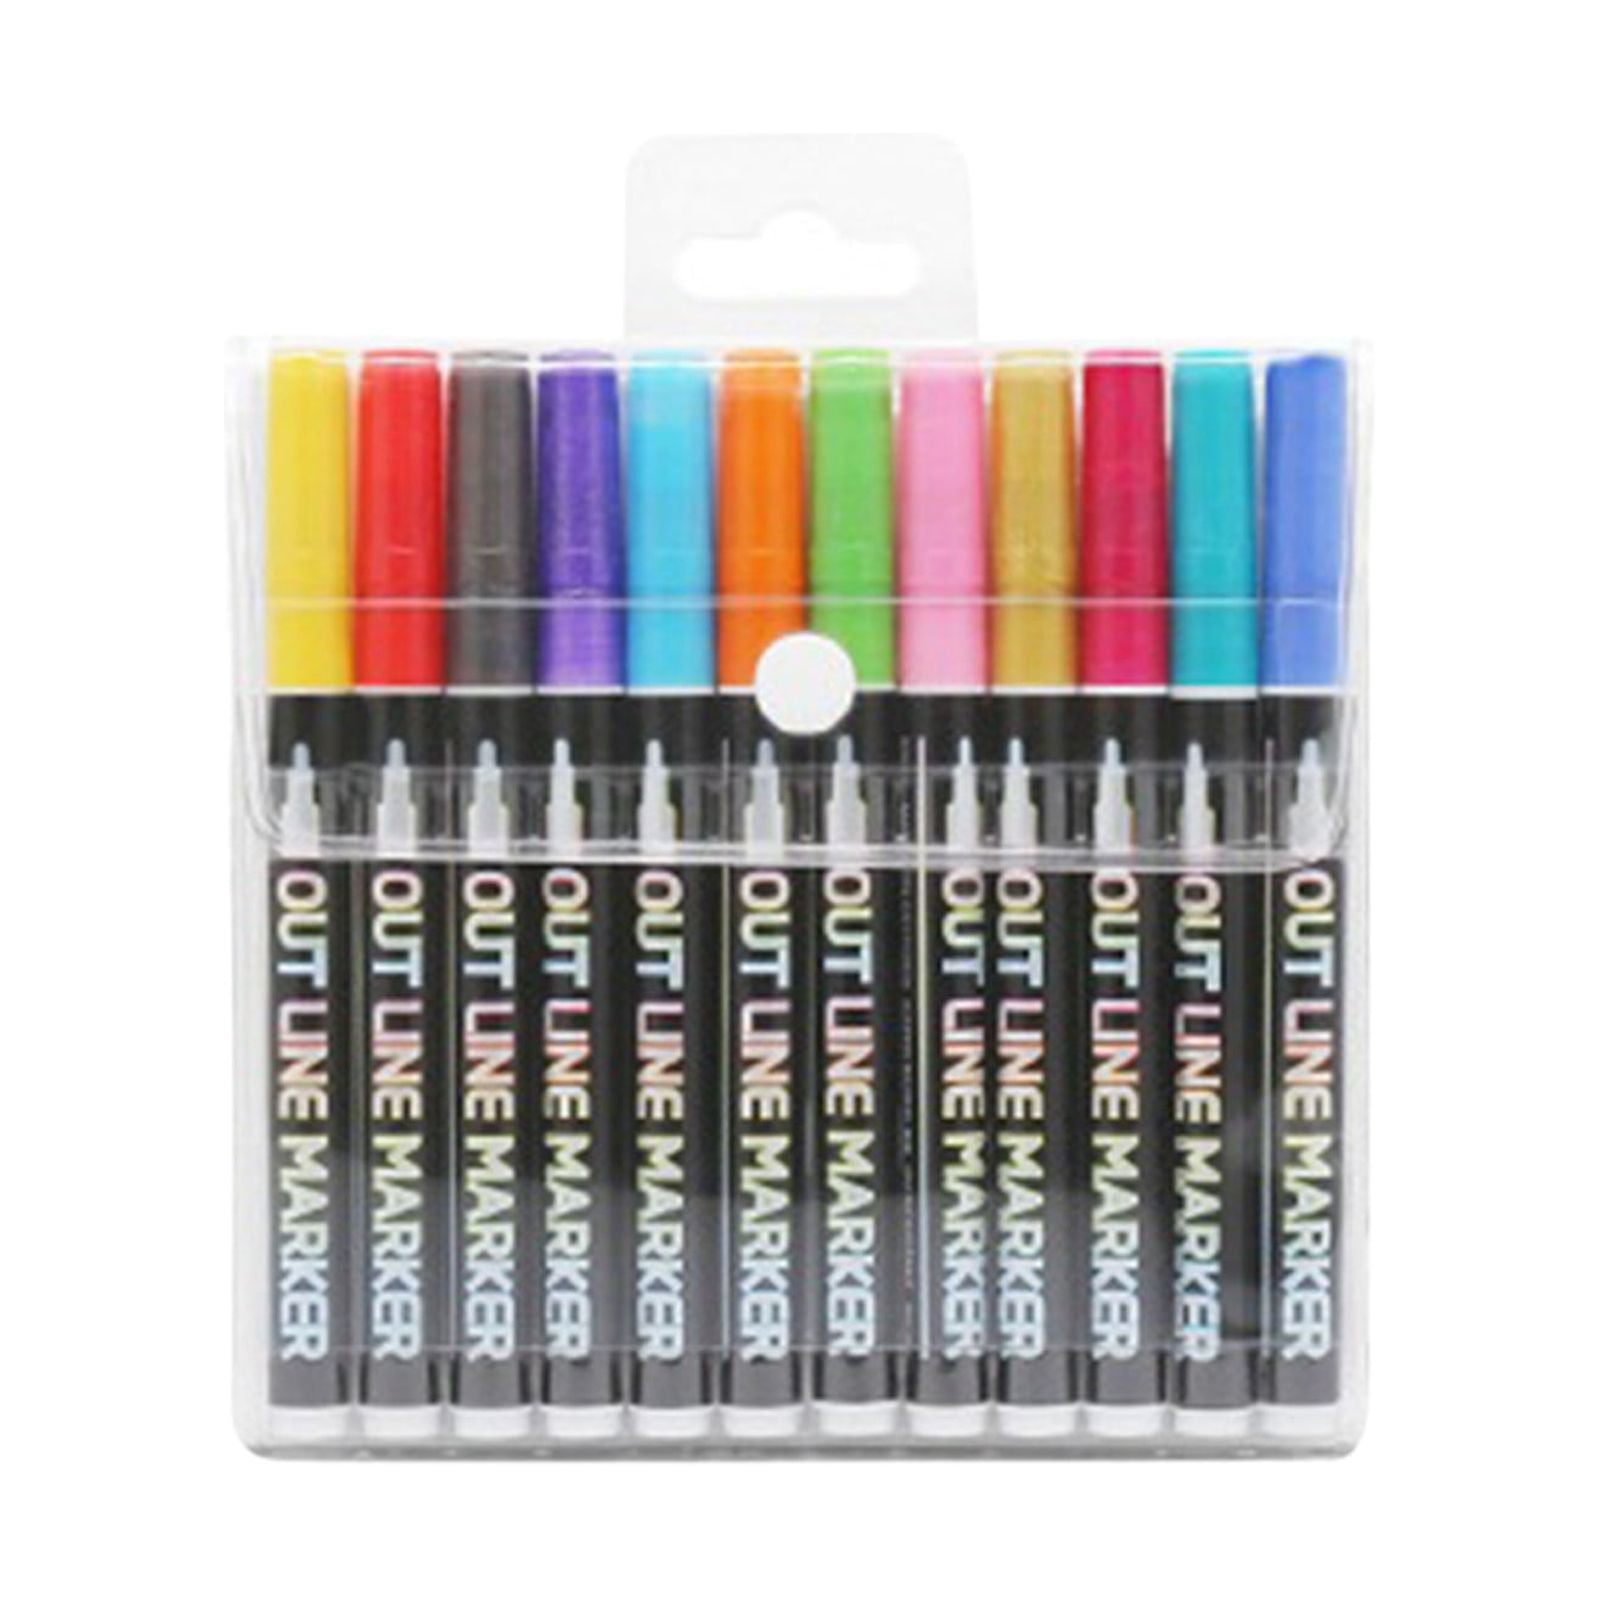 DTBPRQ Gel Pens, Colored Pencils Multifunctional DIY Graffiti Pen